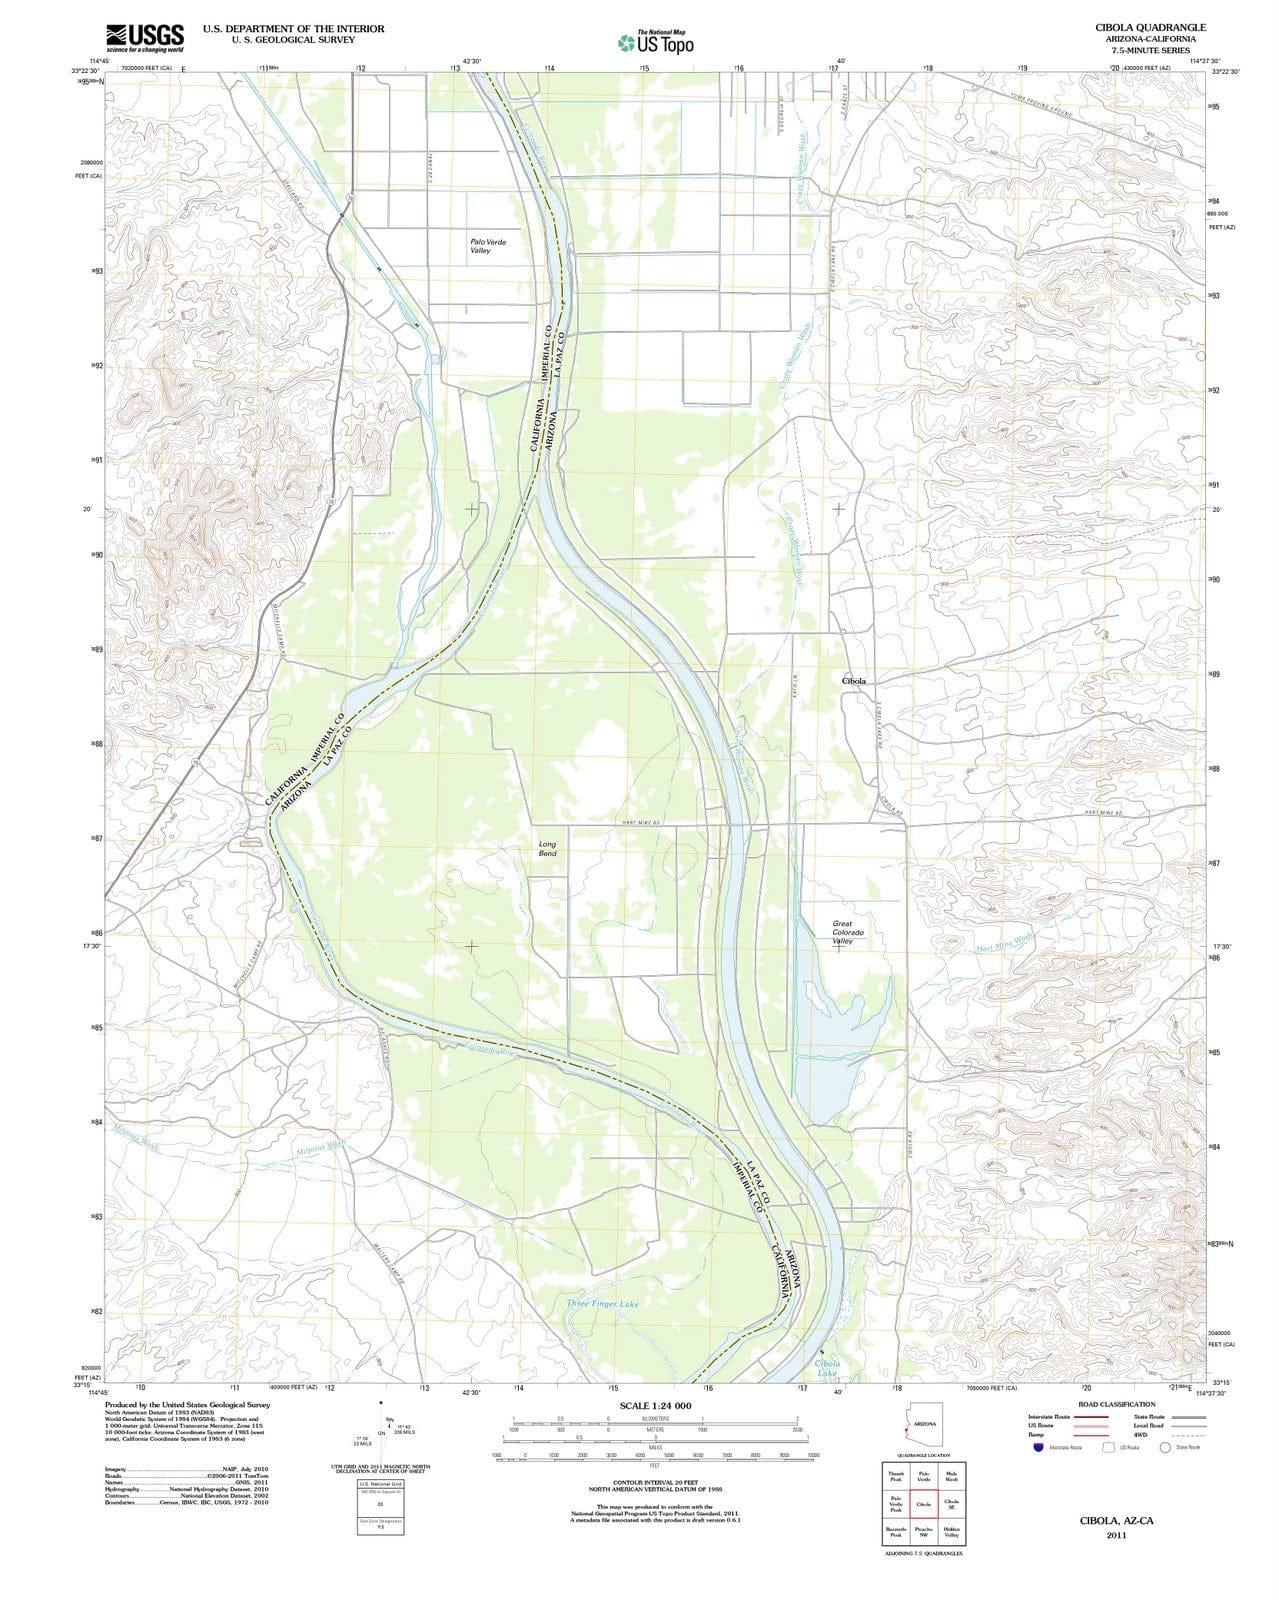 2011 Cibola, AZ - Arizona - USGS Topographic Map